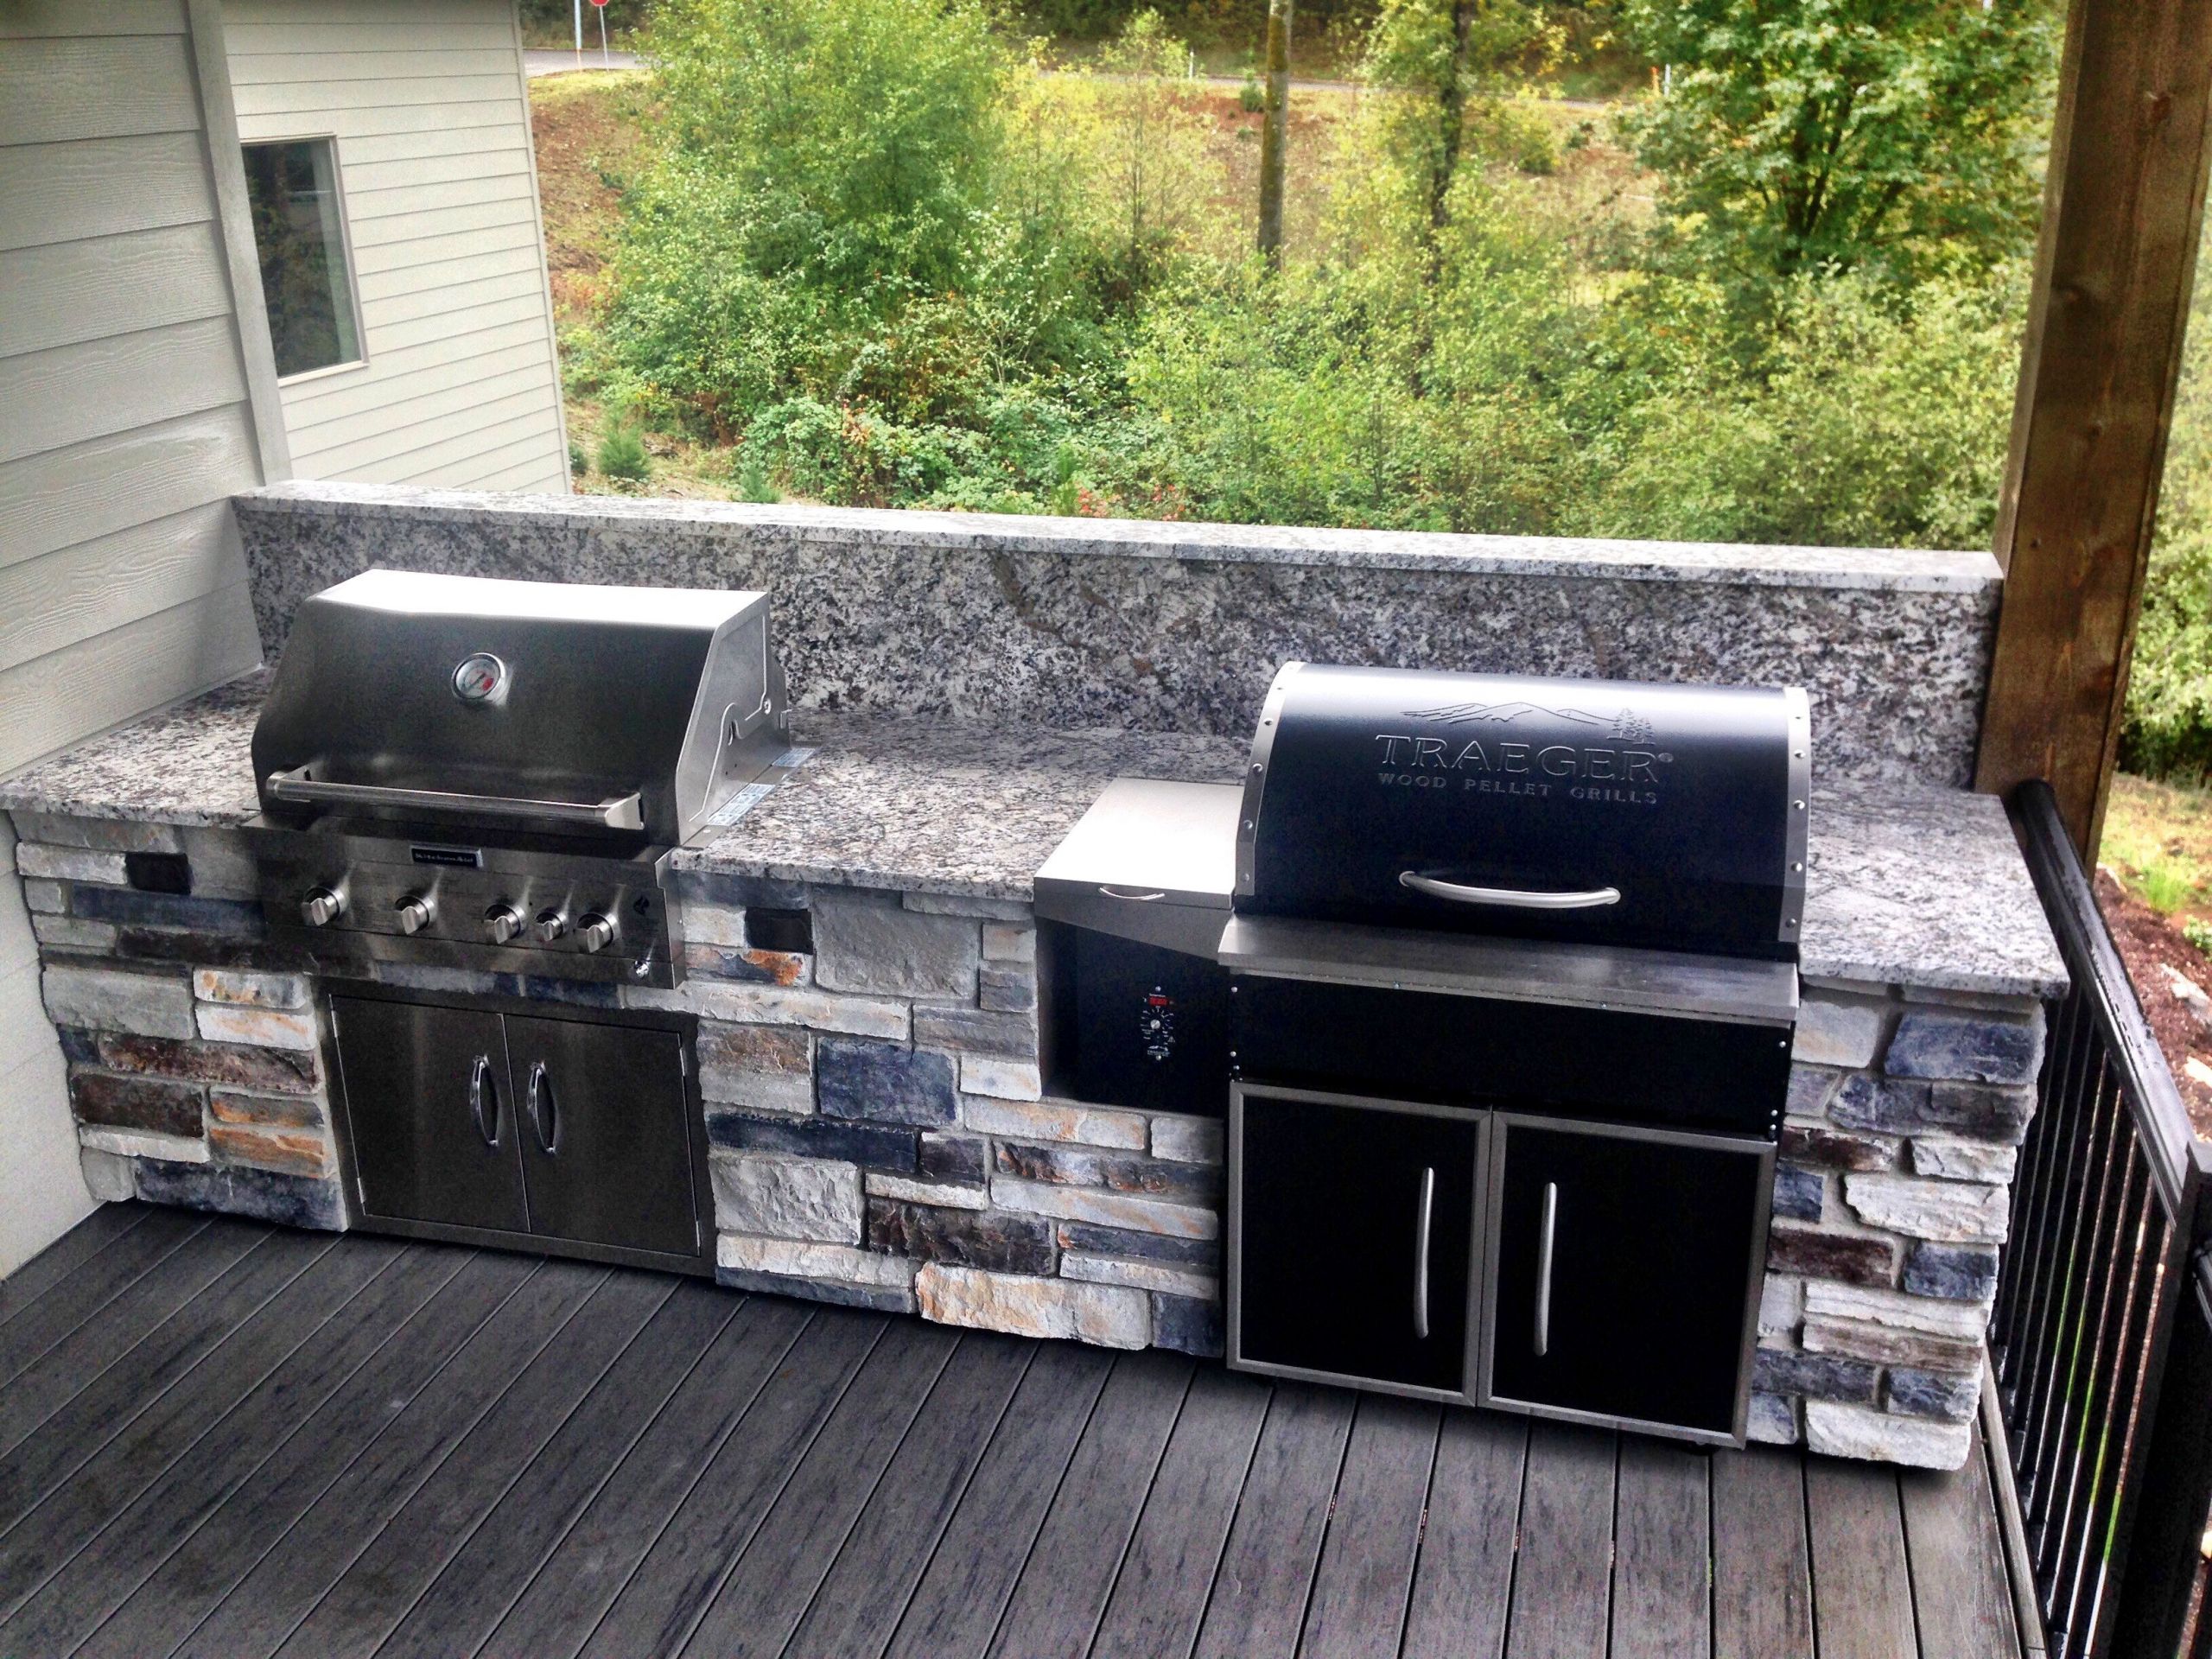 Traeger Built In Outdoor Kitchen
 OUTDOOR KITCHEN in Salem Oregon October 2016 Traeger